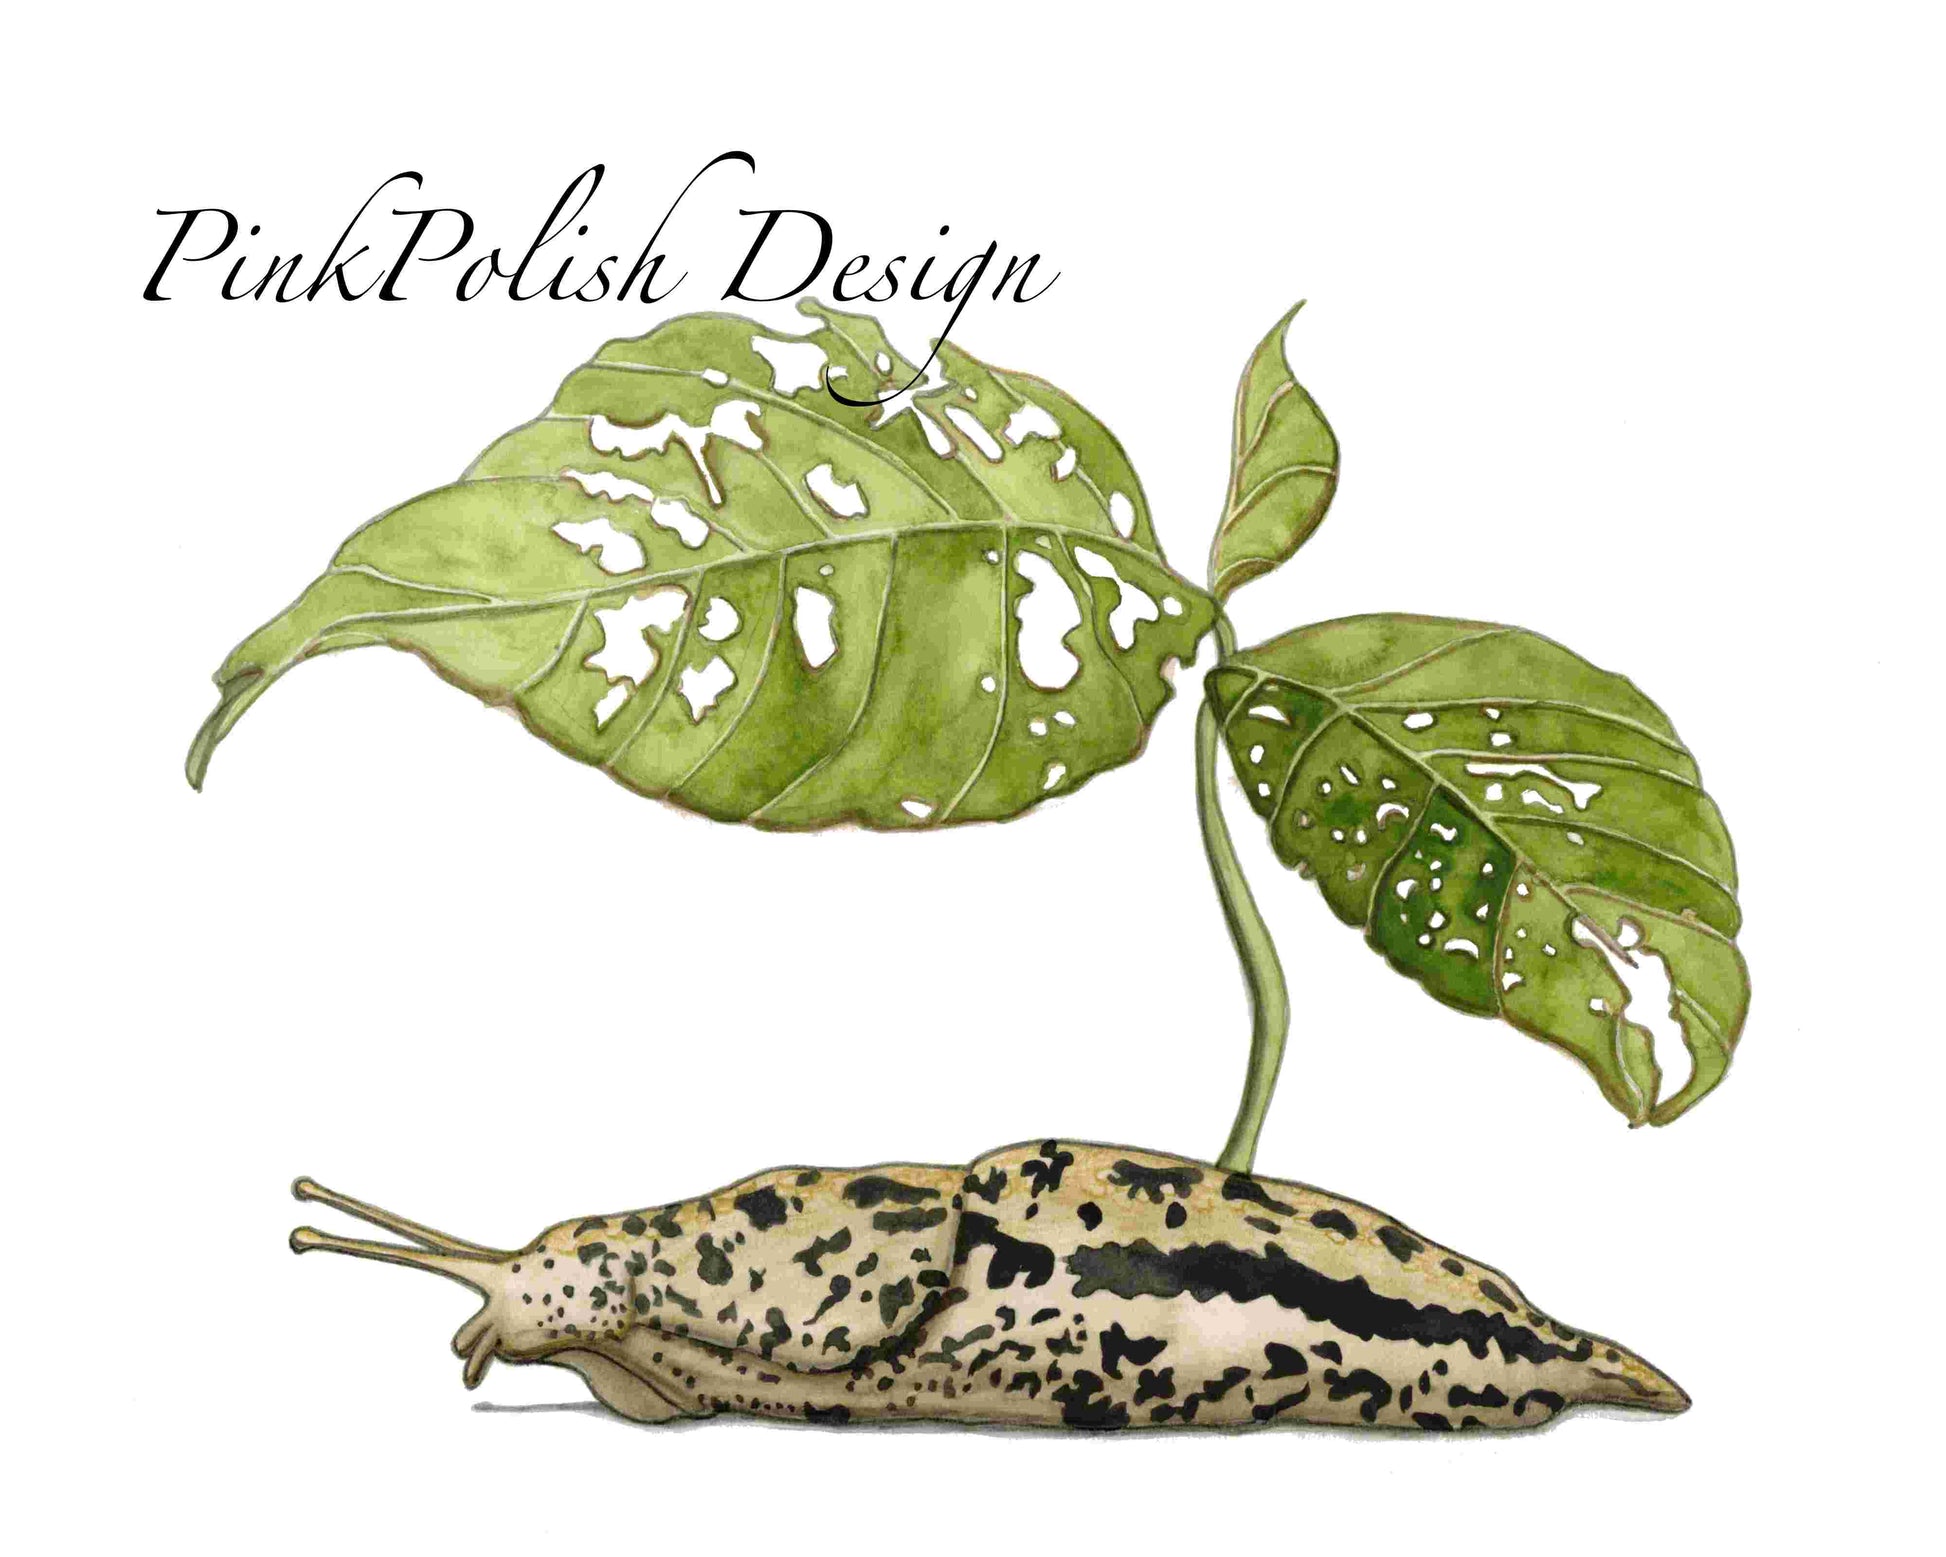 PinkPolish Design Art Prints "Slug Sprout" Watercolor Painting: Art Print